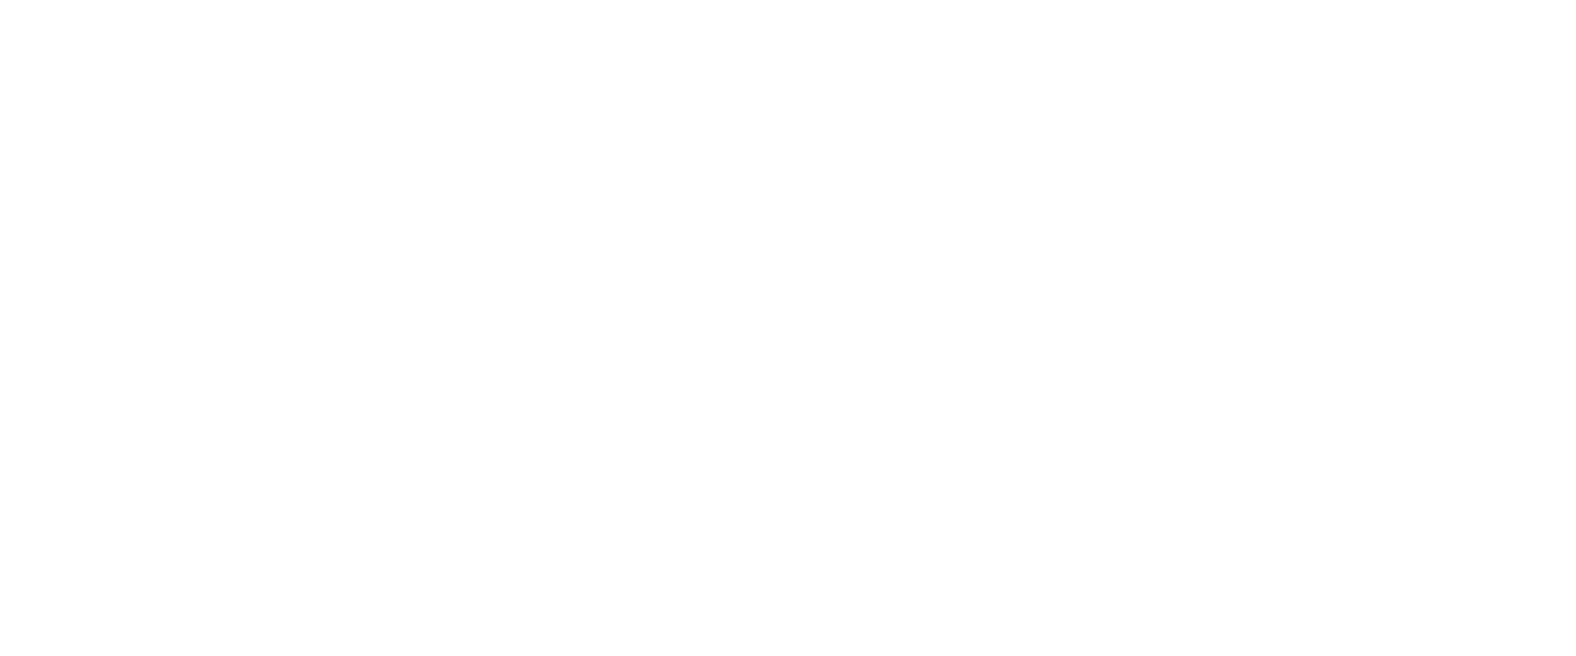 Arab National Bank logo pour fonds sombres (PNG transparent)